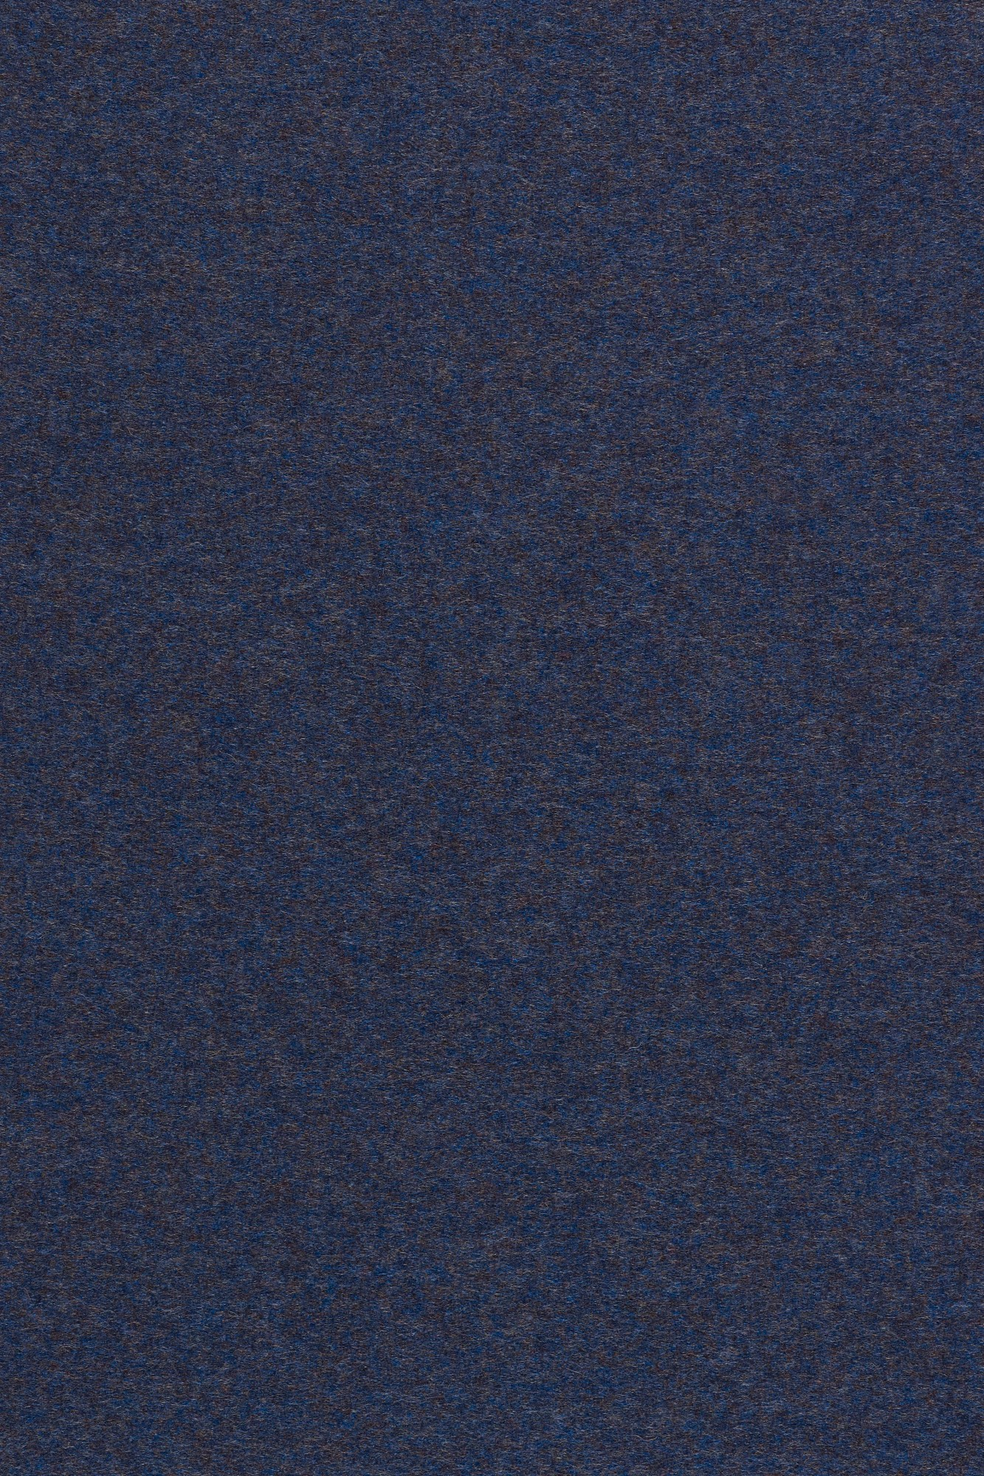 Fabric sample Divina MD 753 blue